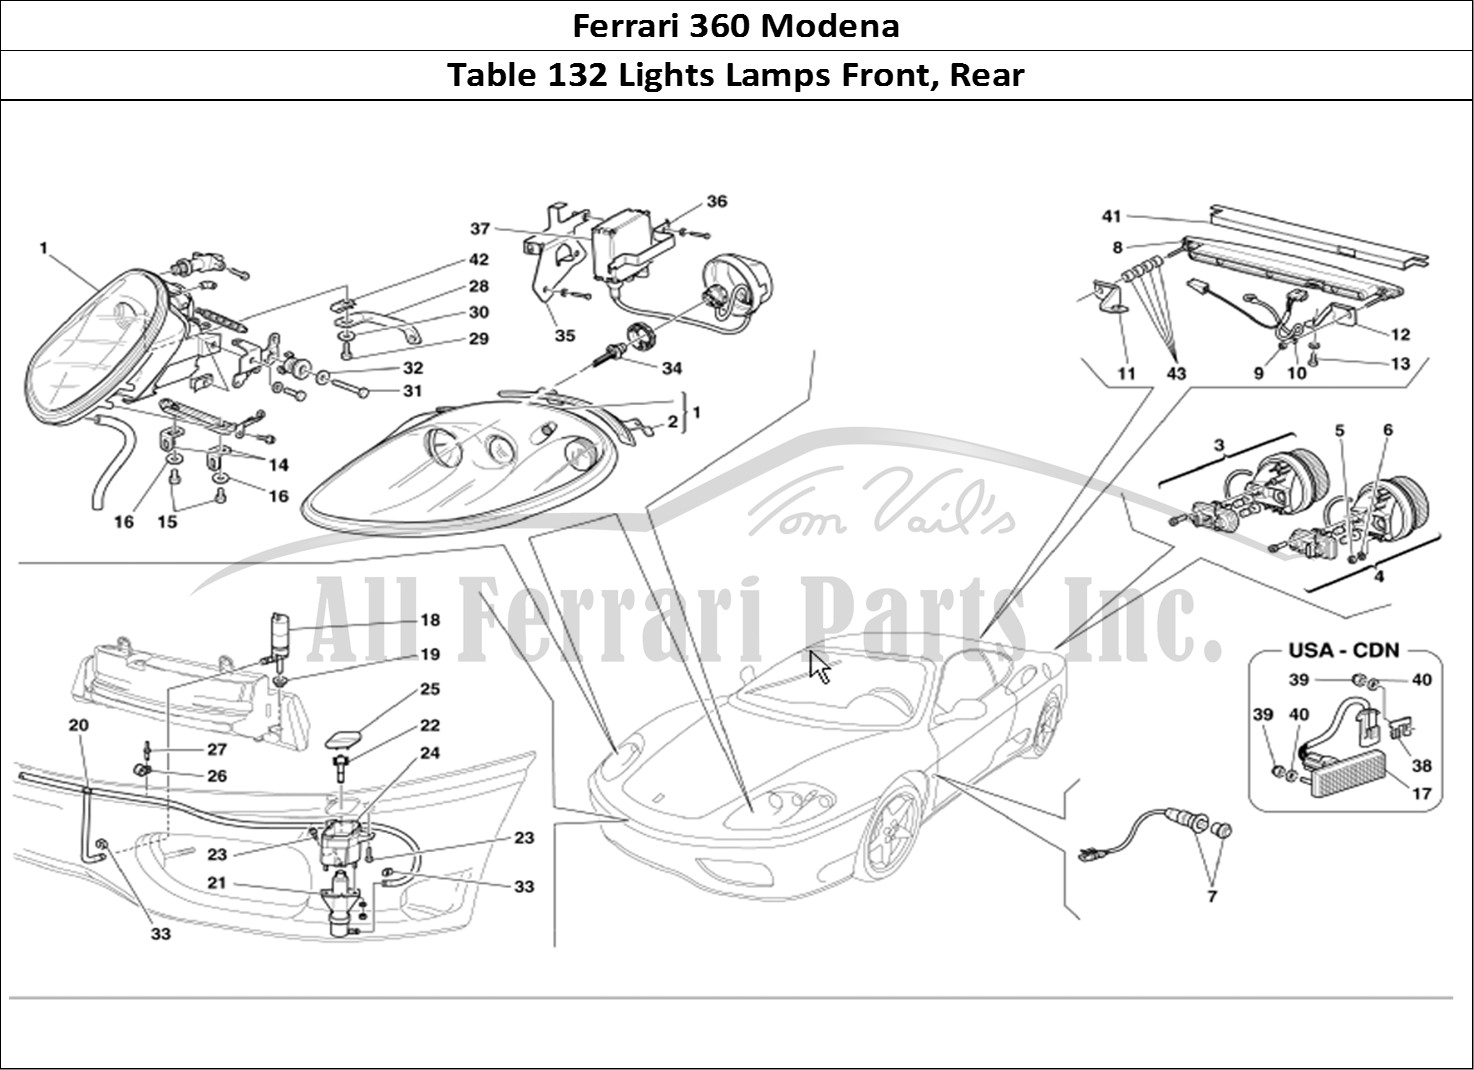 Ferrari Parts Ferrari 360 Modena Page 132 Front and Rear Lights